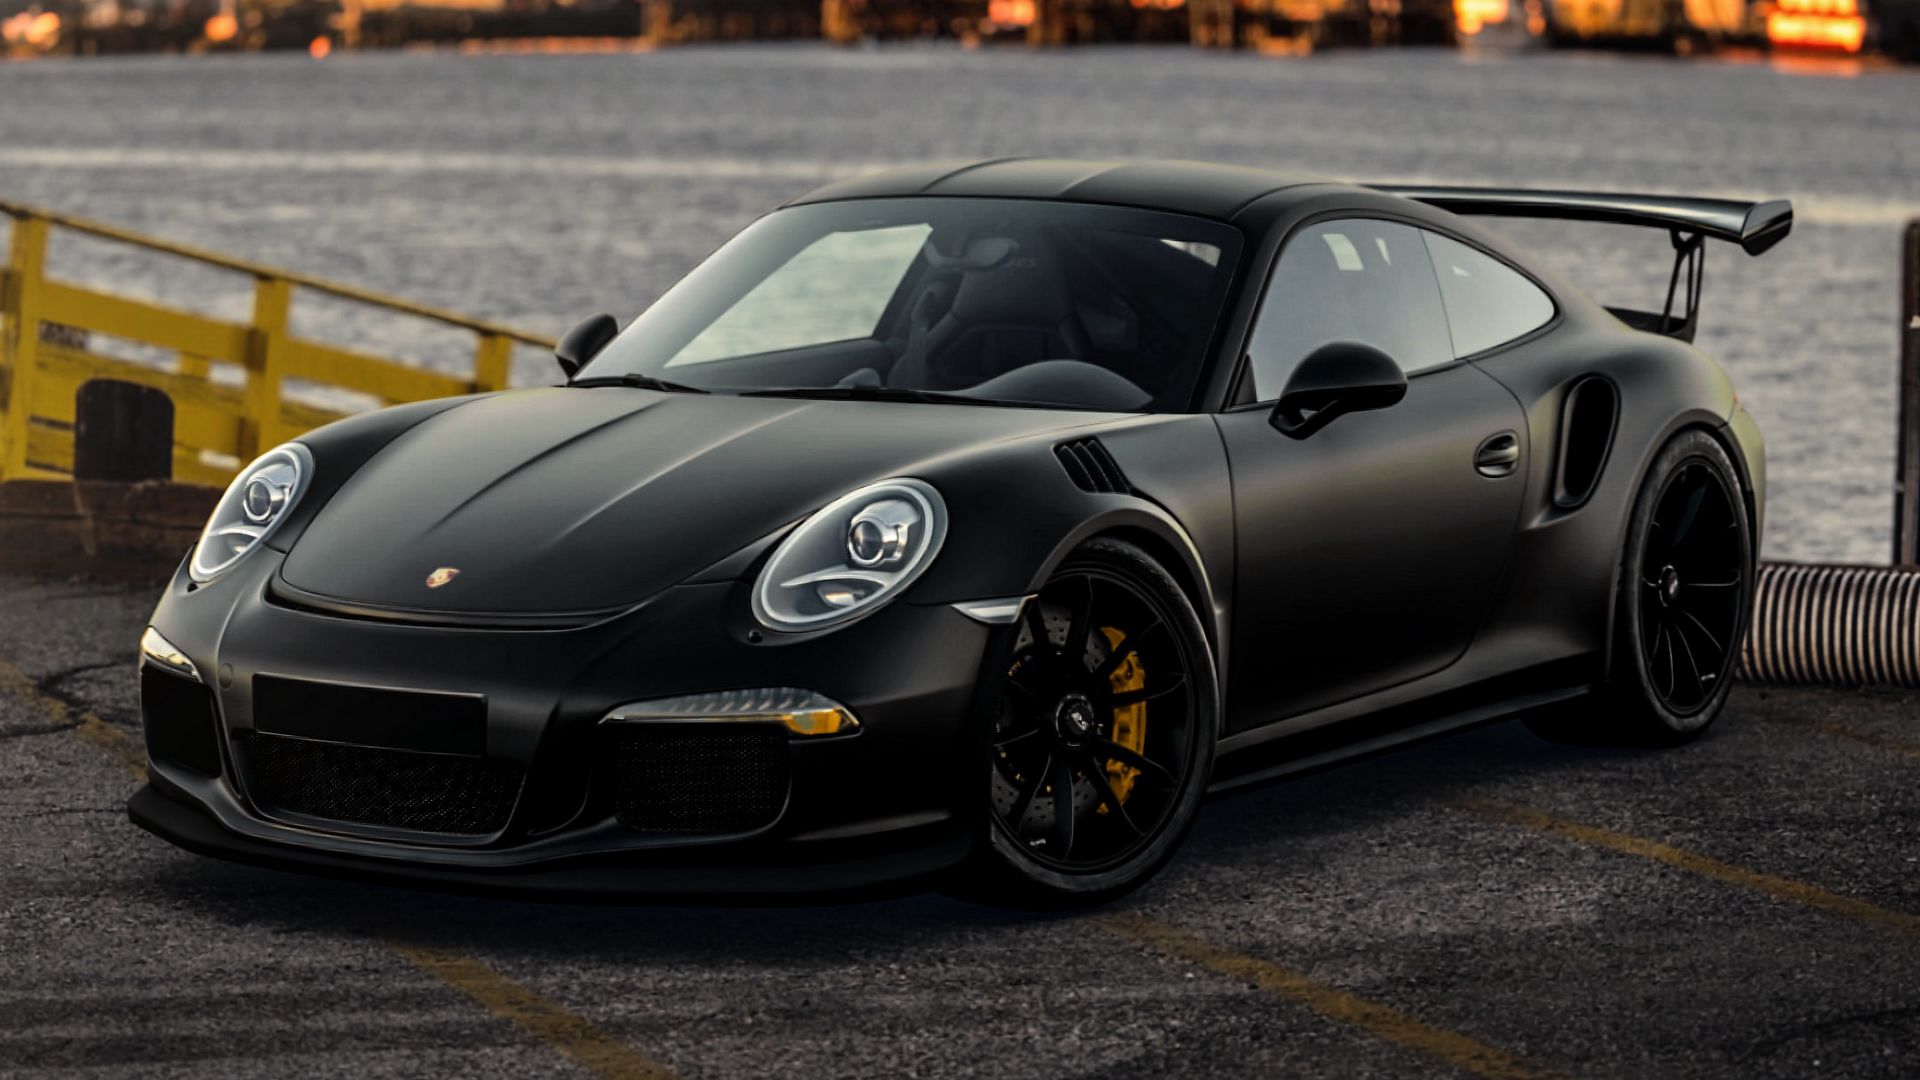 Wallpaper Porsche 911 Black Sports Car - Free Wallpapers for Apple